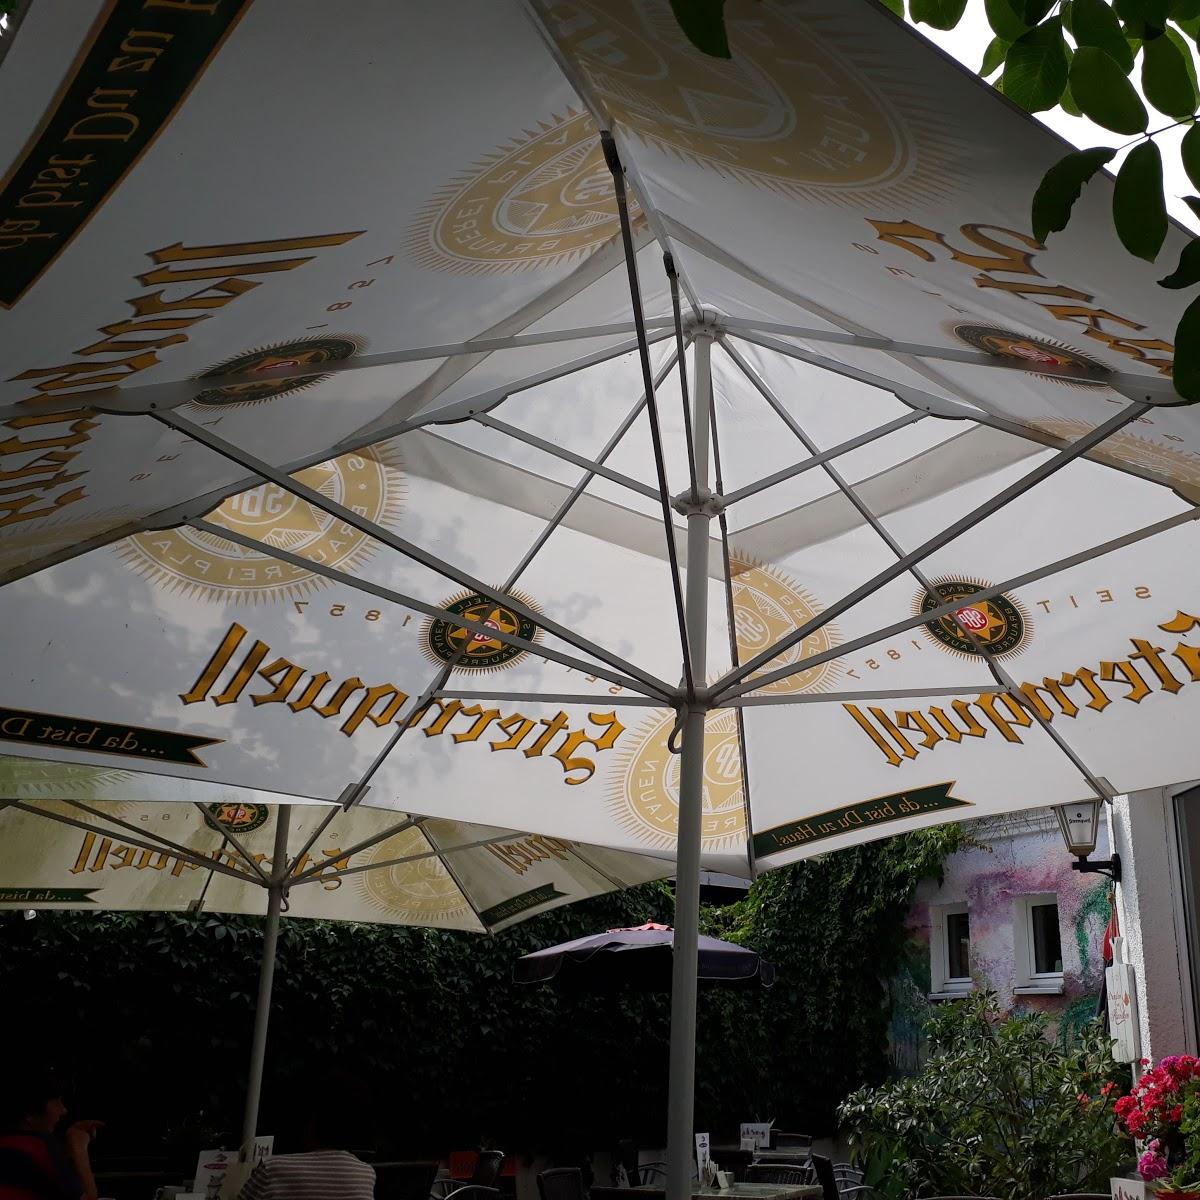 Restaurant "Café Syrau - Gaststätte u. Pension" in Rosenbach